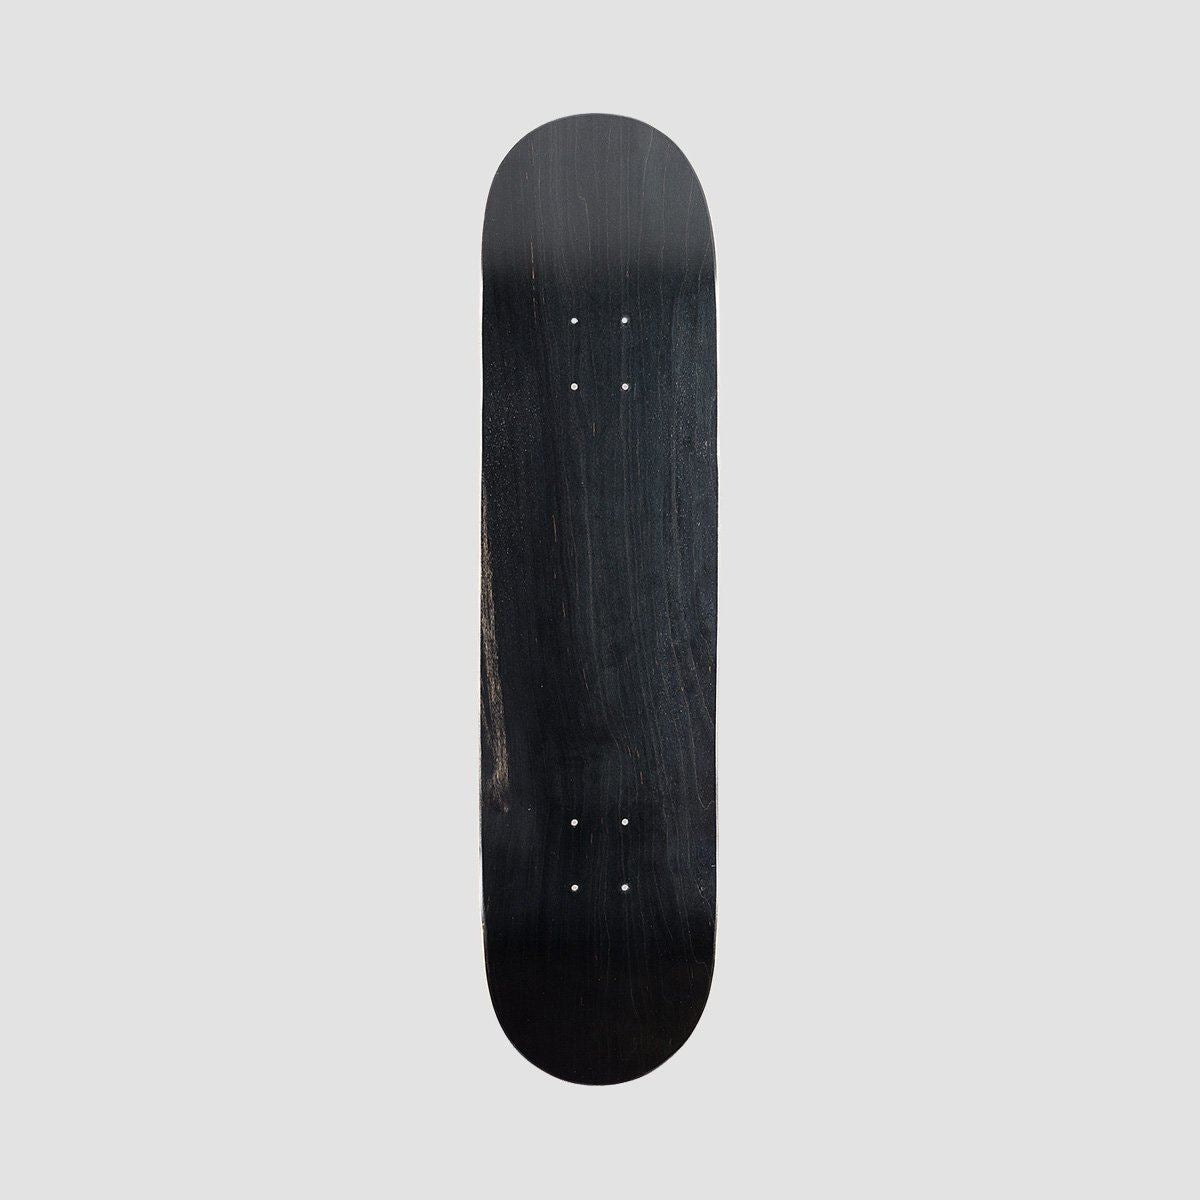 Enuff Classic Skateboard Deck Black - 7.75"